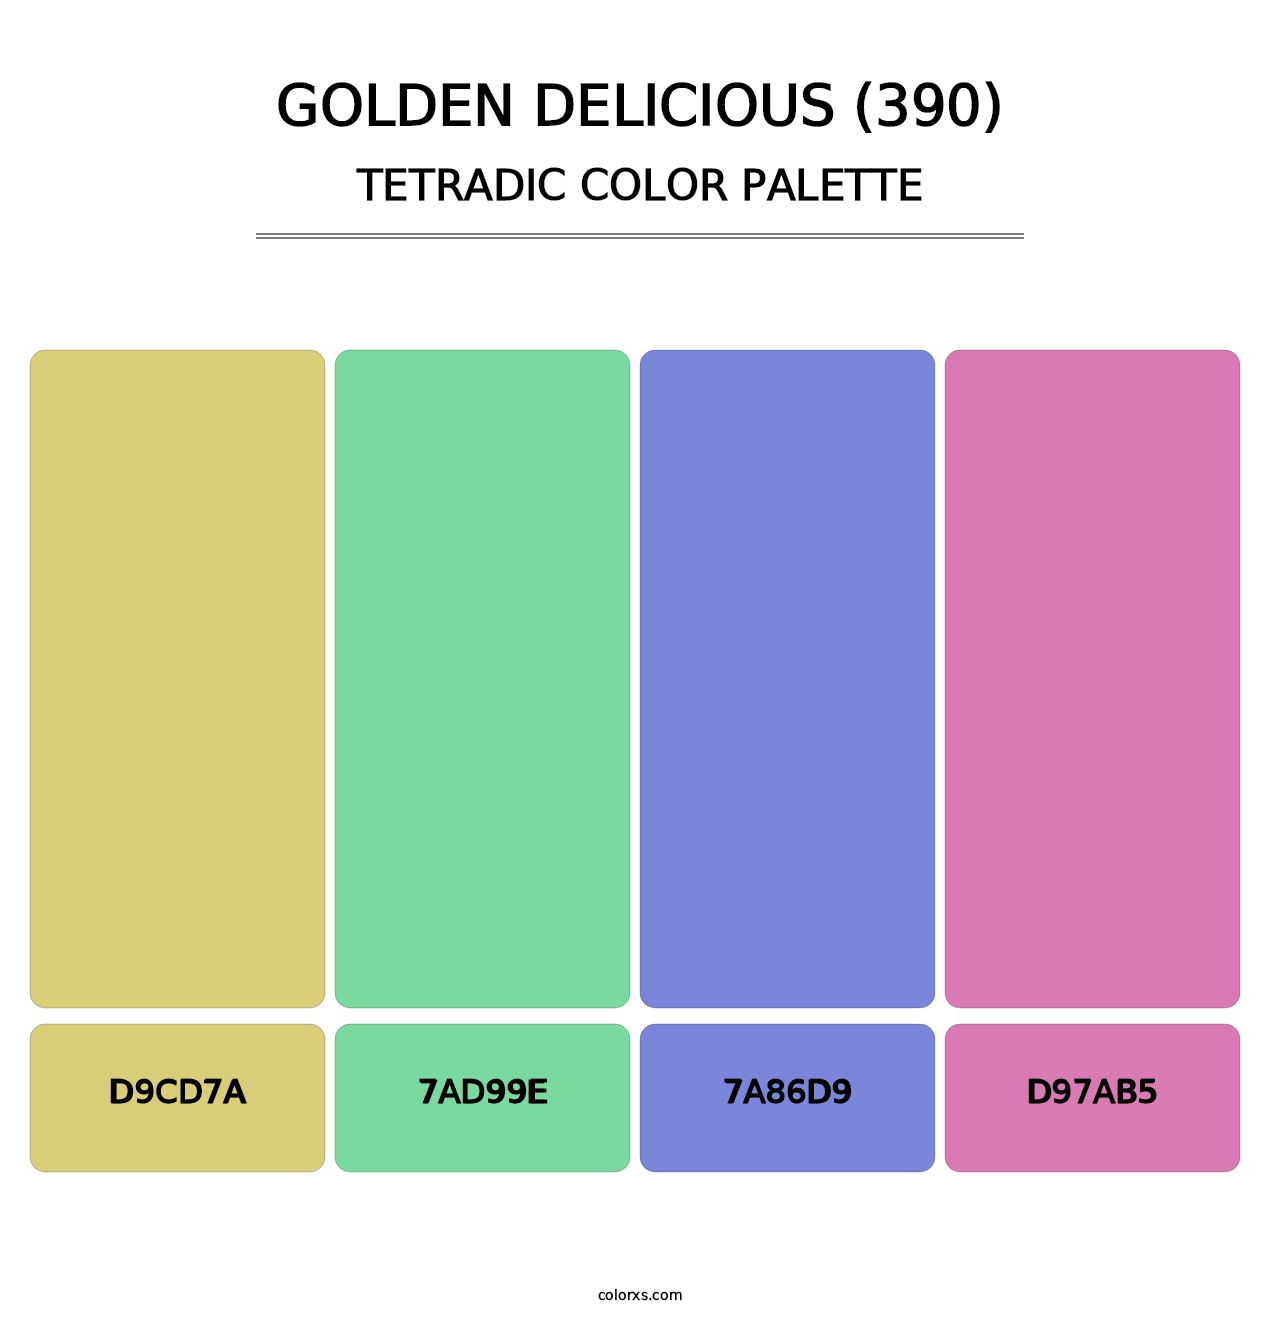 Golden Delicious (390) - Tetradic Color Palette